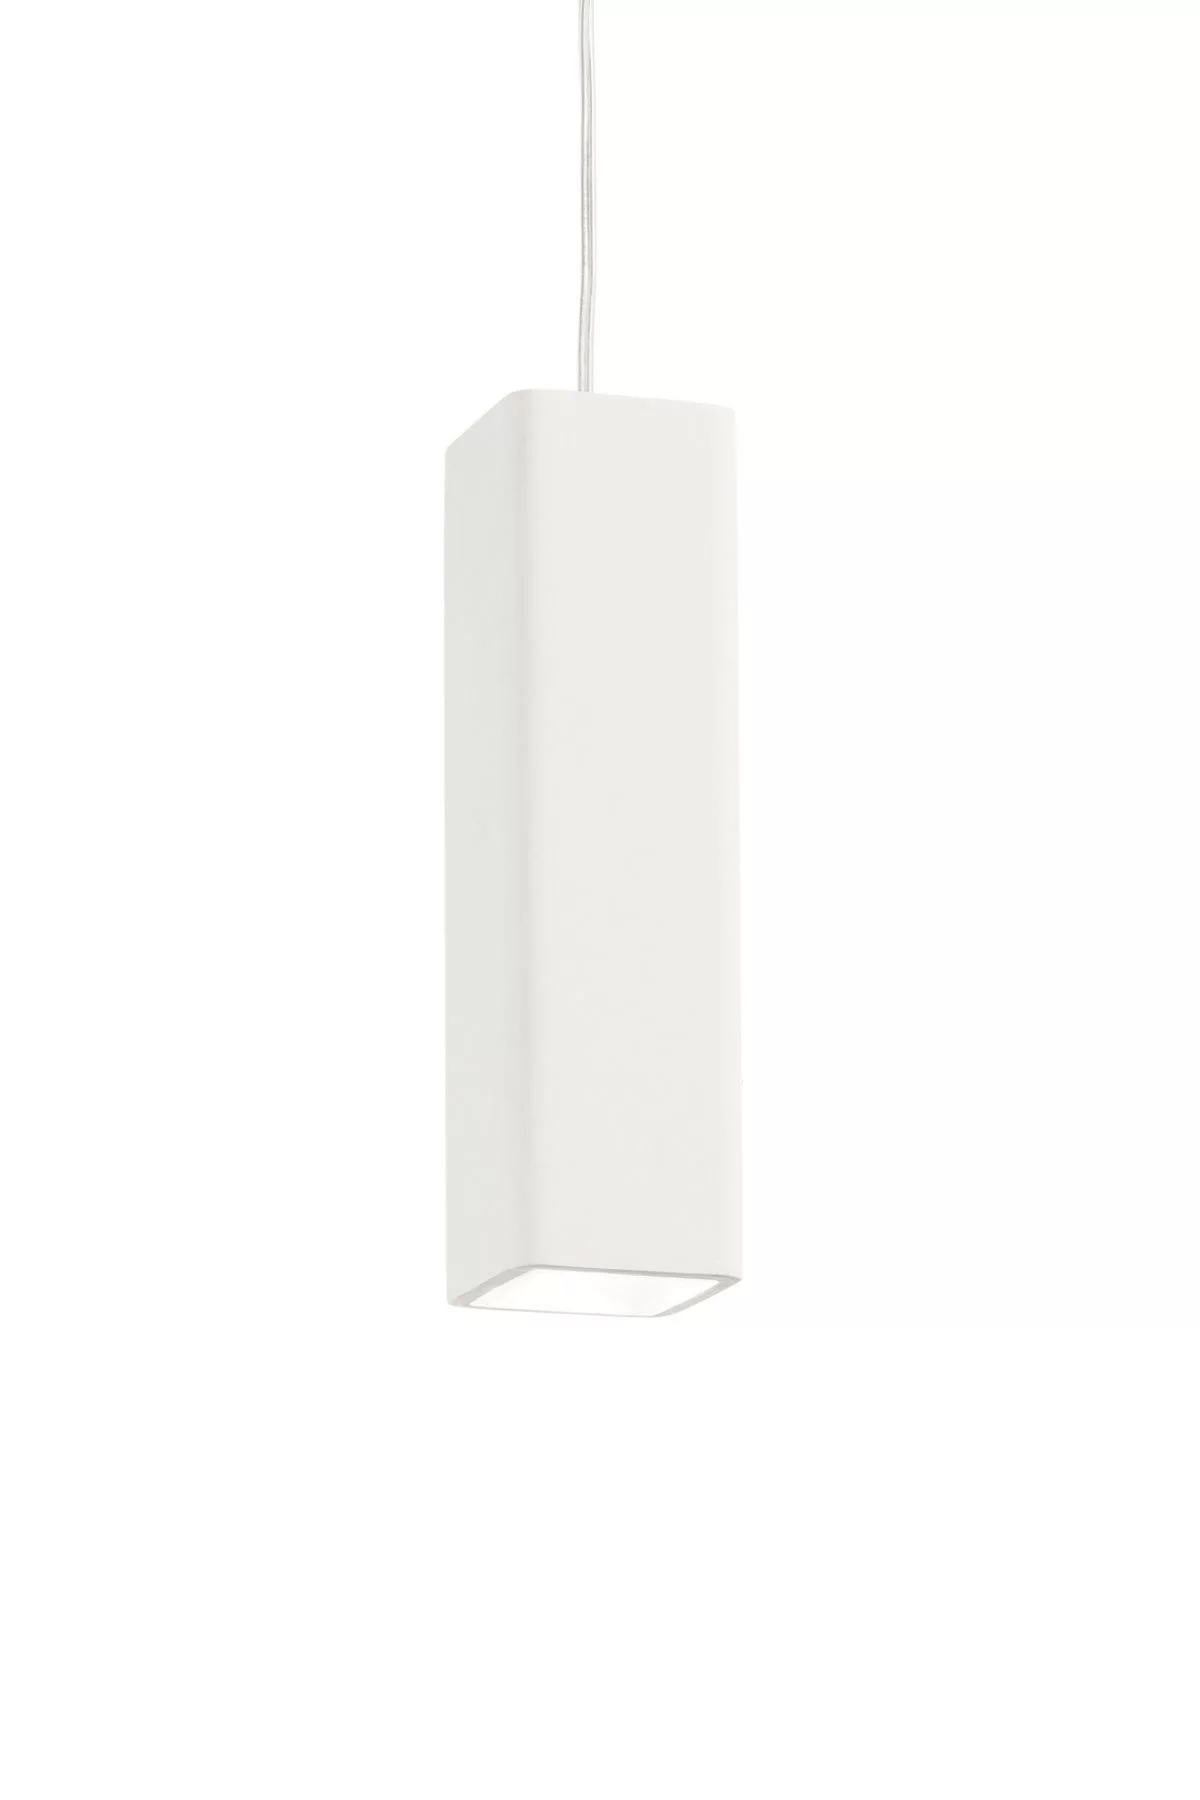   
                        
                        Люстра IDEAL LUX (Италия) 13082    
                         в стиле Хай-тек.  
                        Тип источника света: светодиодная лампа, сменная.                         Форма: Квадрат.                                                                          фото 1